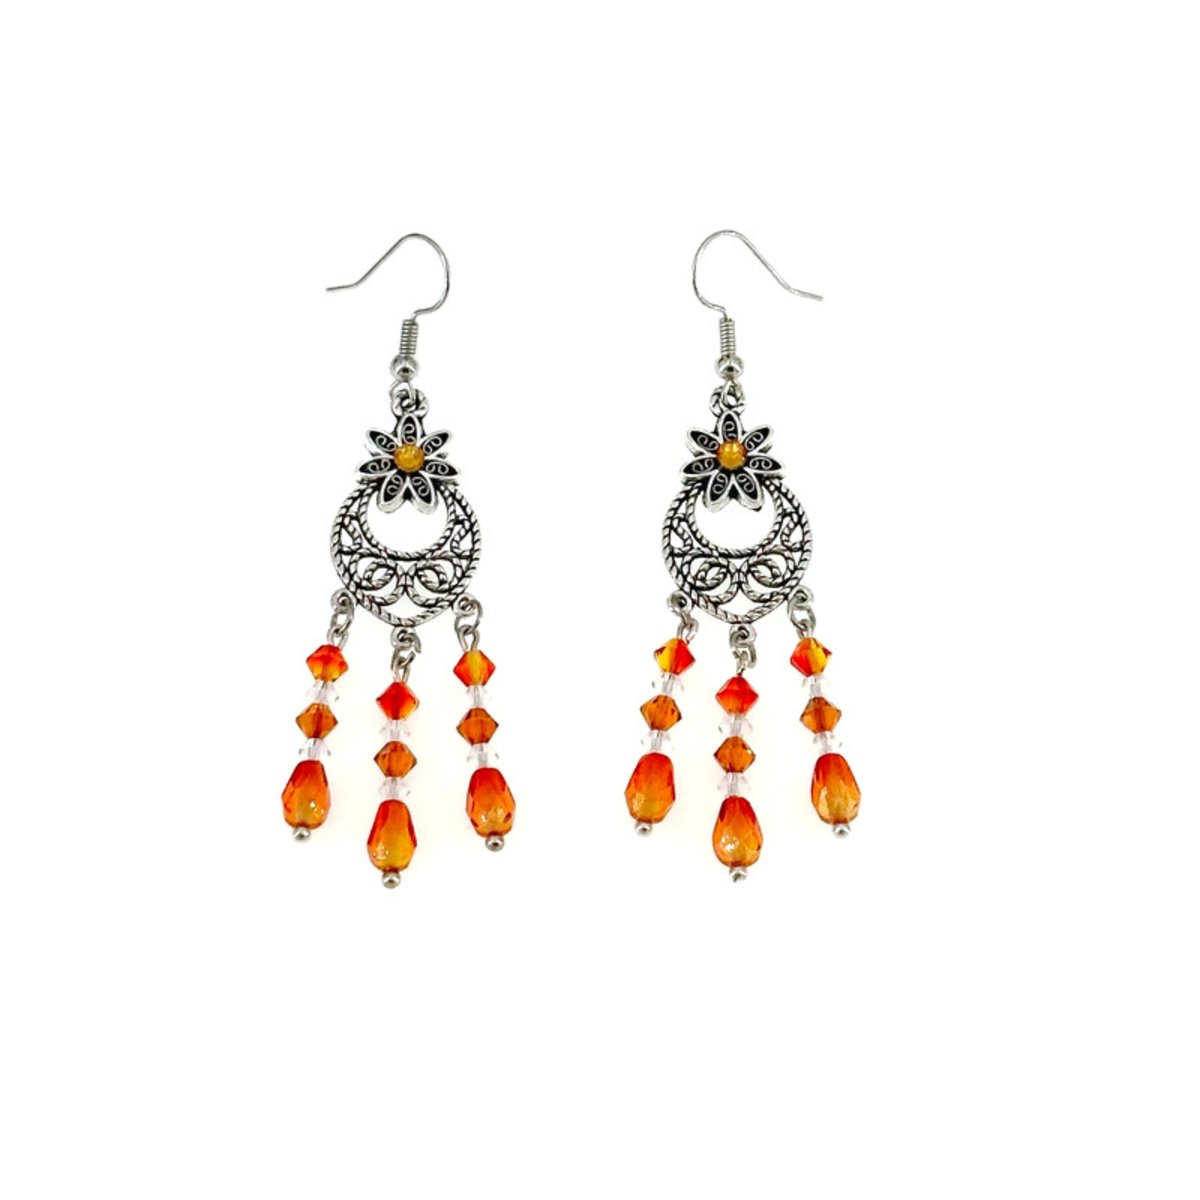 Fire opal crystal earrings #handmadegift #Jewelry #fireopal #etsyshop #earrings zaverdesigns.etsy.com/listing/248402…